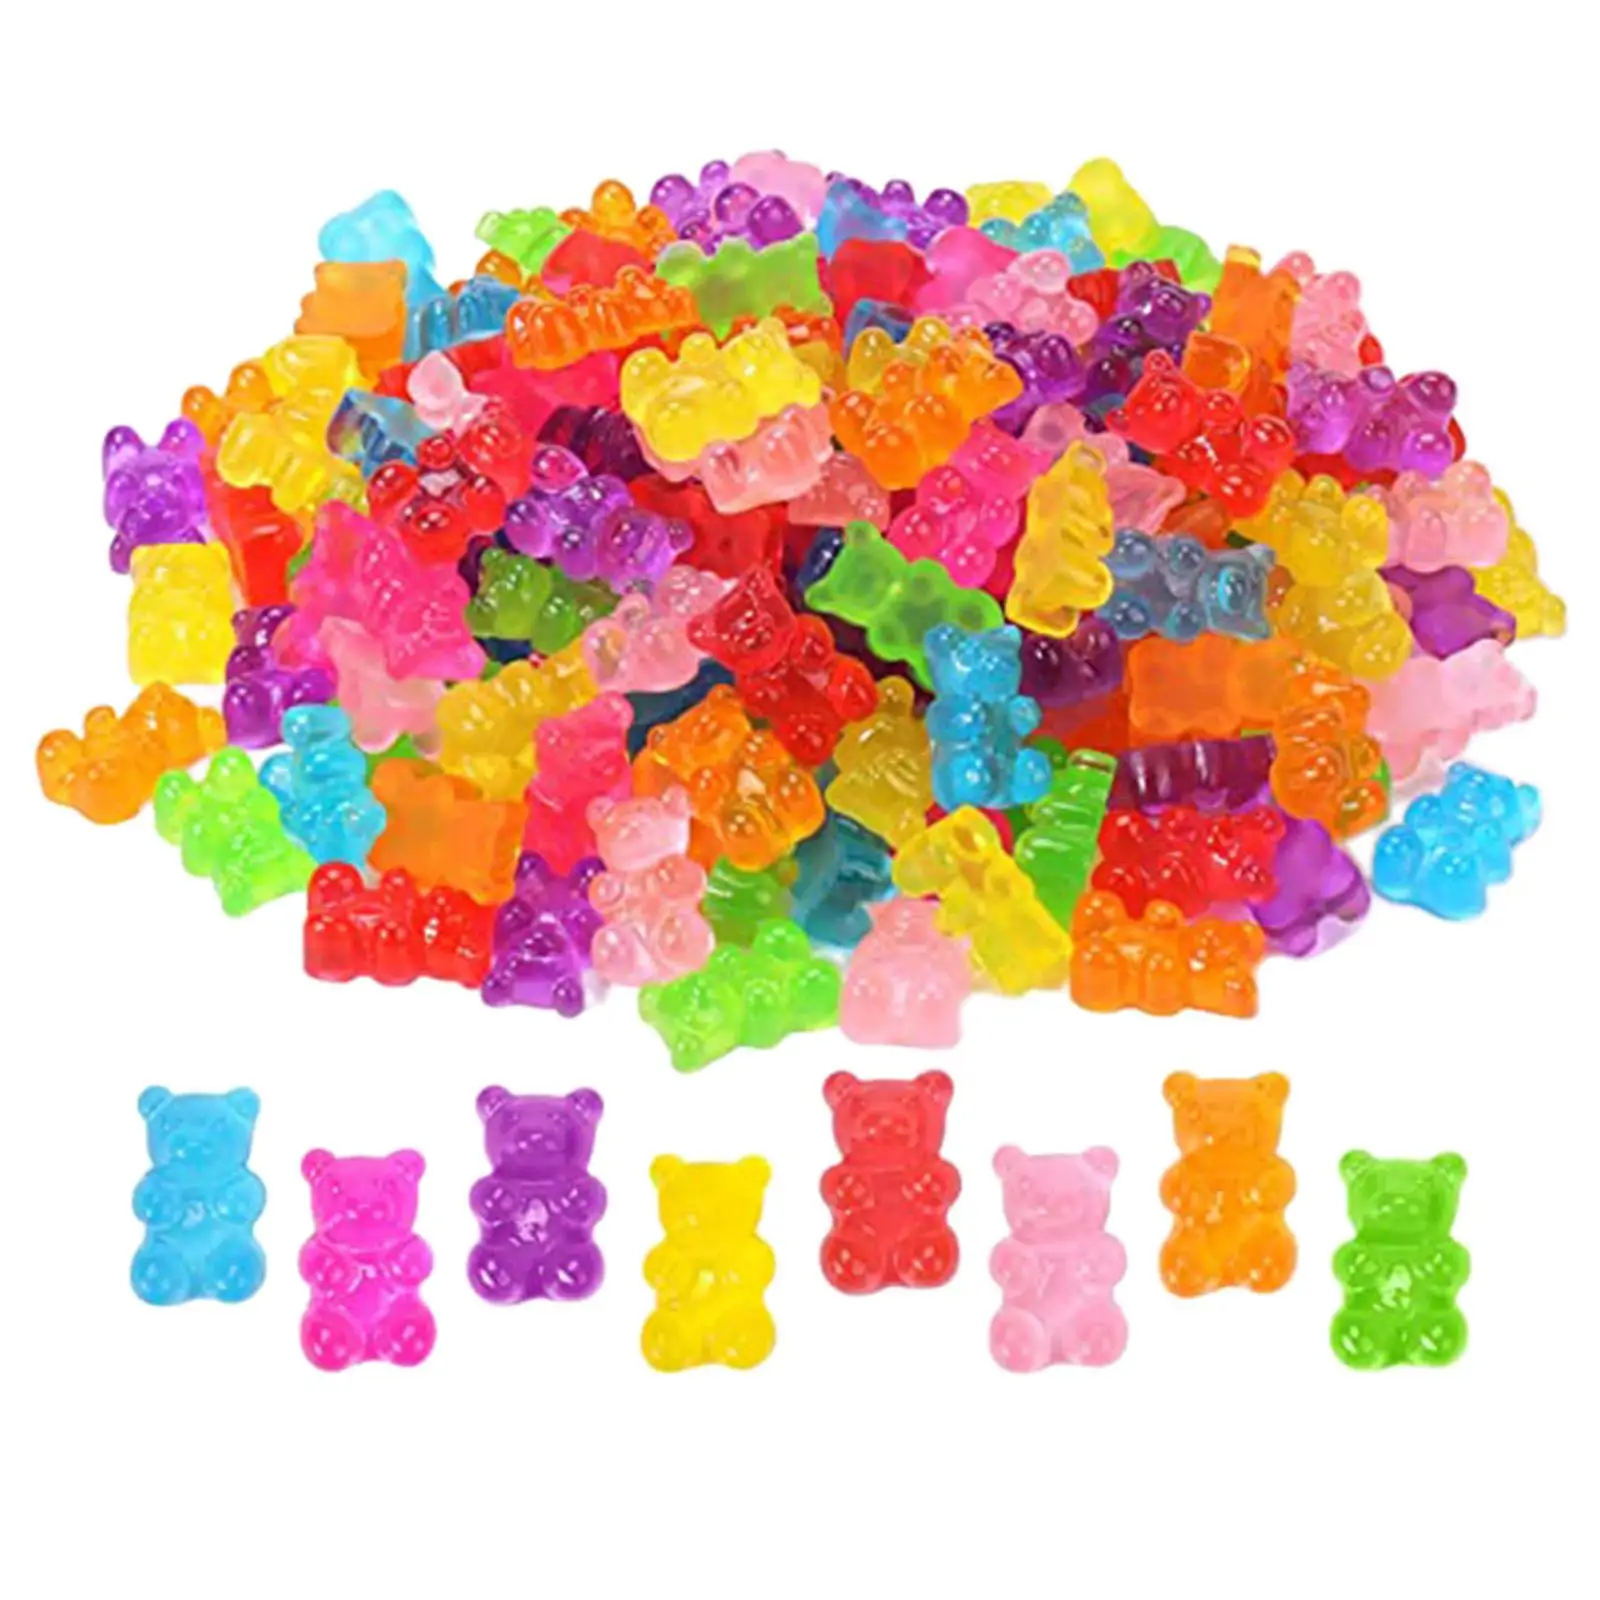 50 Pieces Gummy Bear Charms Flatback DIY Supplies for Decoration Children